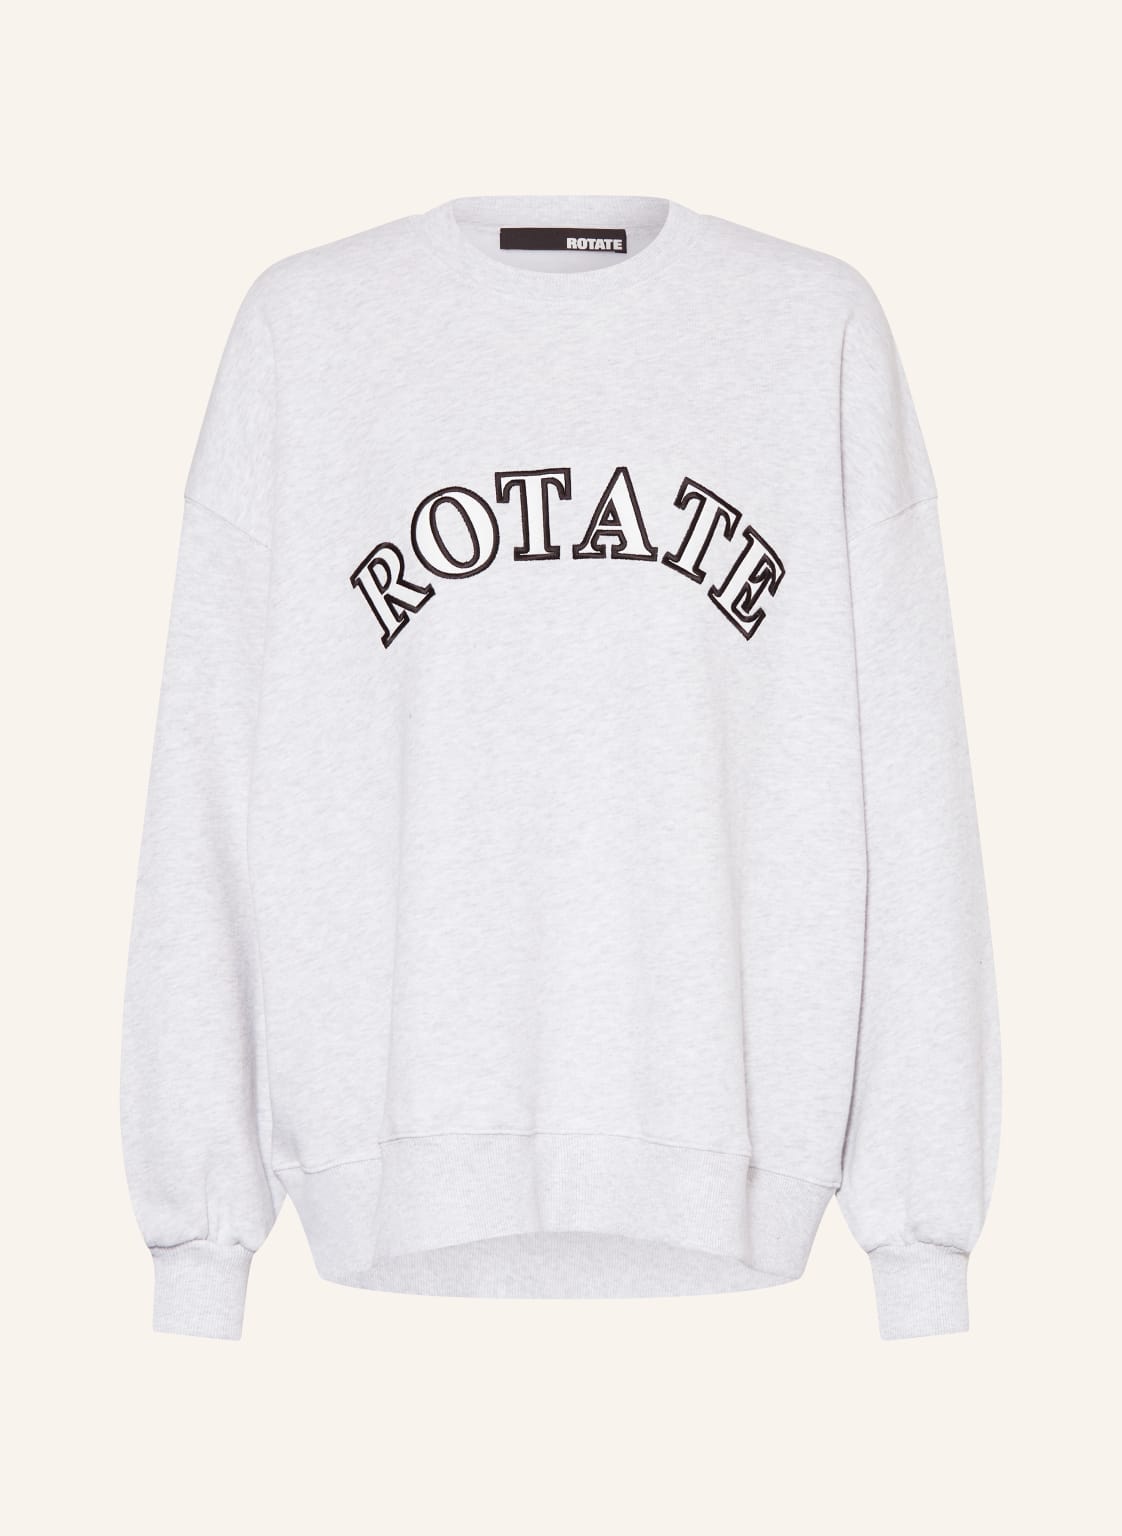 Rotate Sweatshirt grau von ROTATE